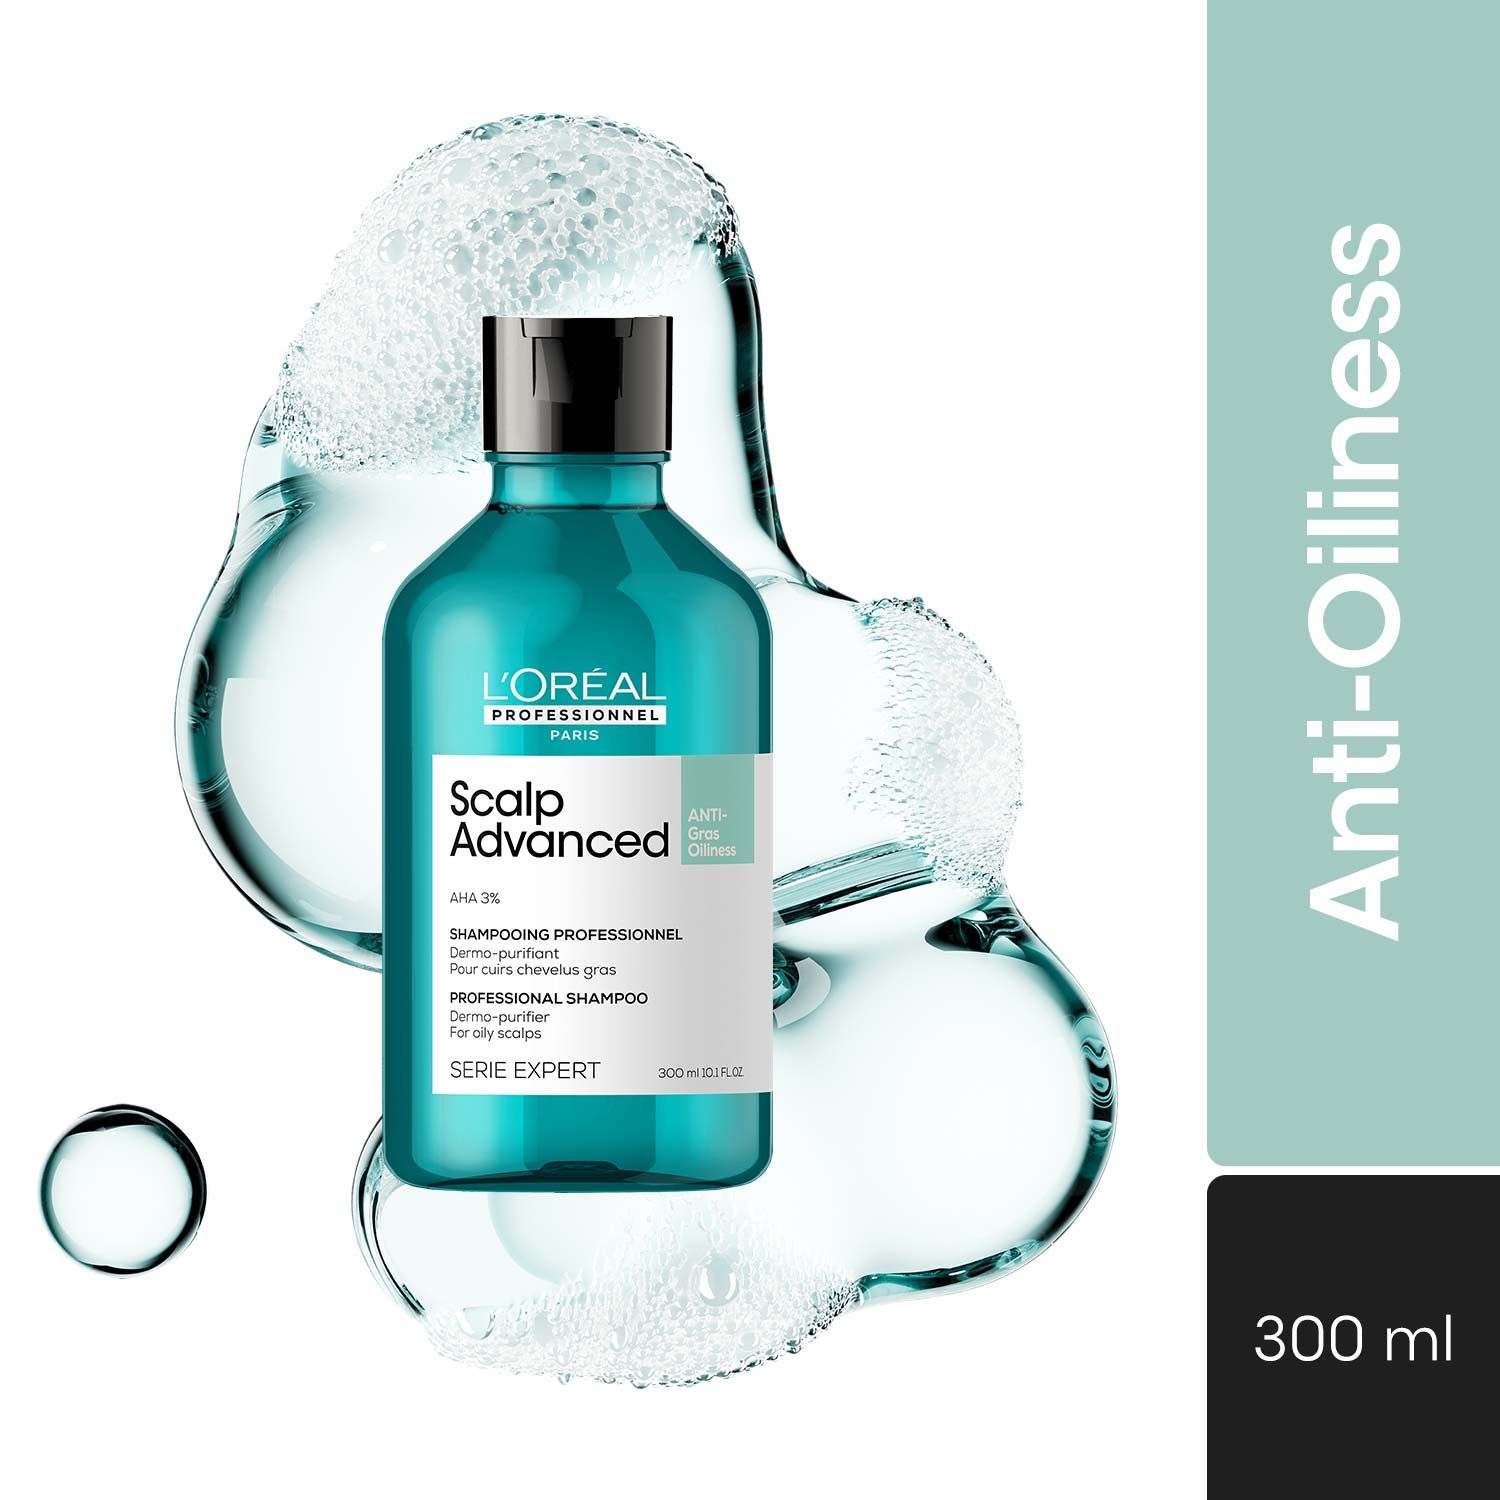 L'Oreal Professionnel Paris Scalp Advanced Anti-Oiliness Shampoo